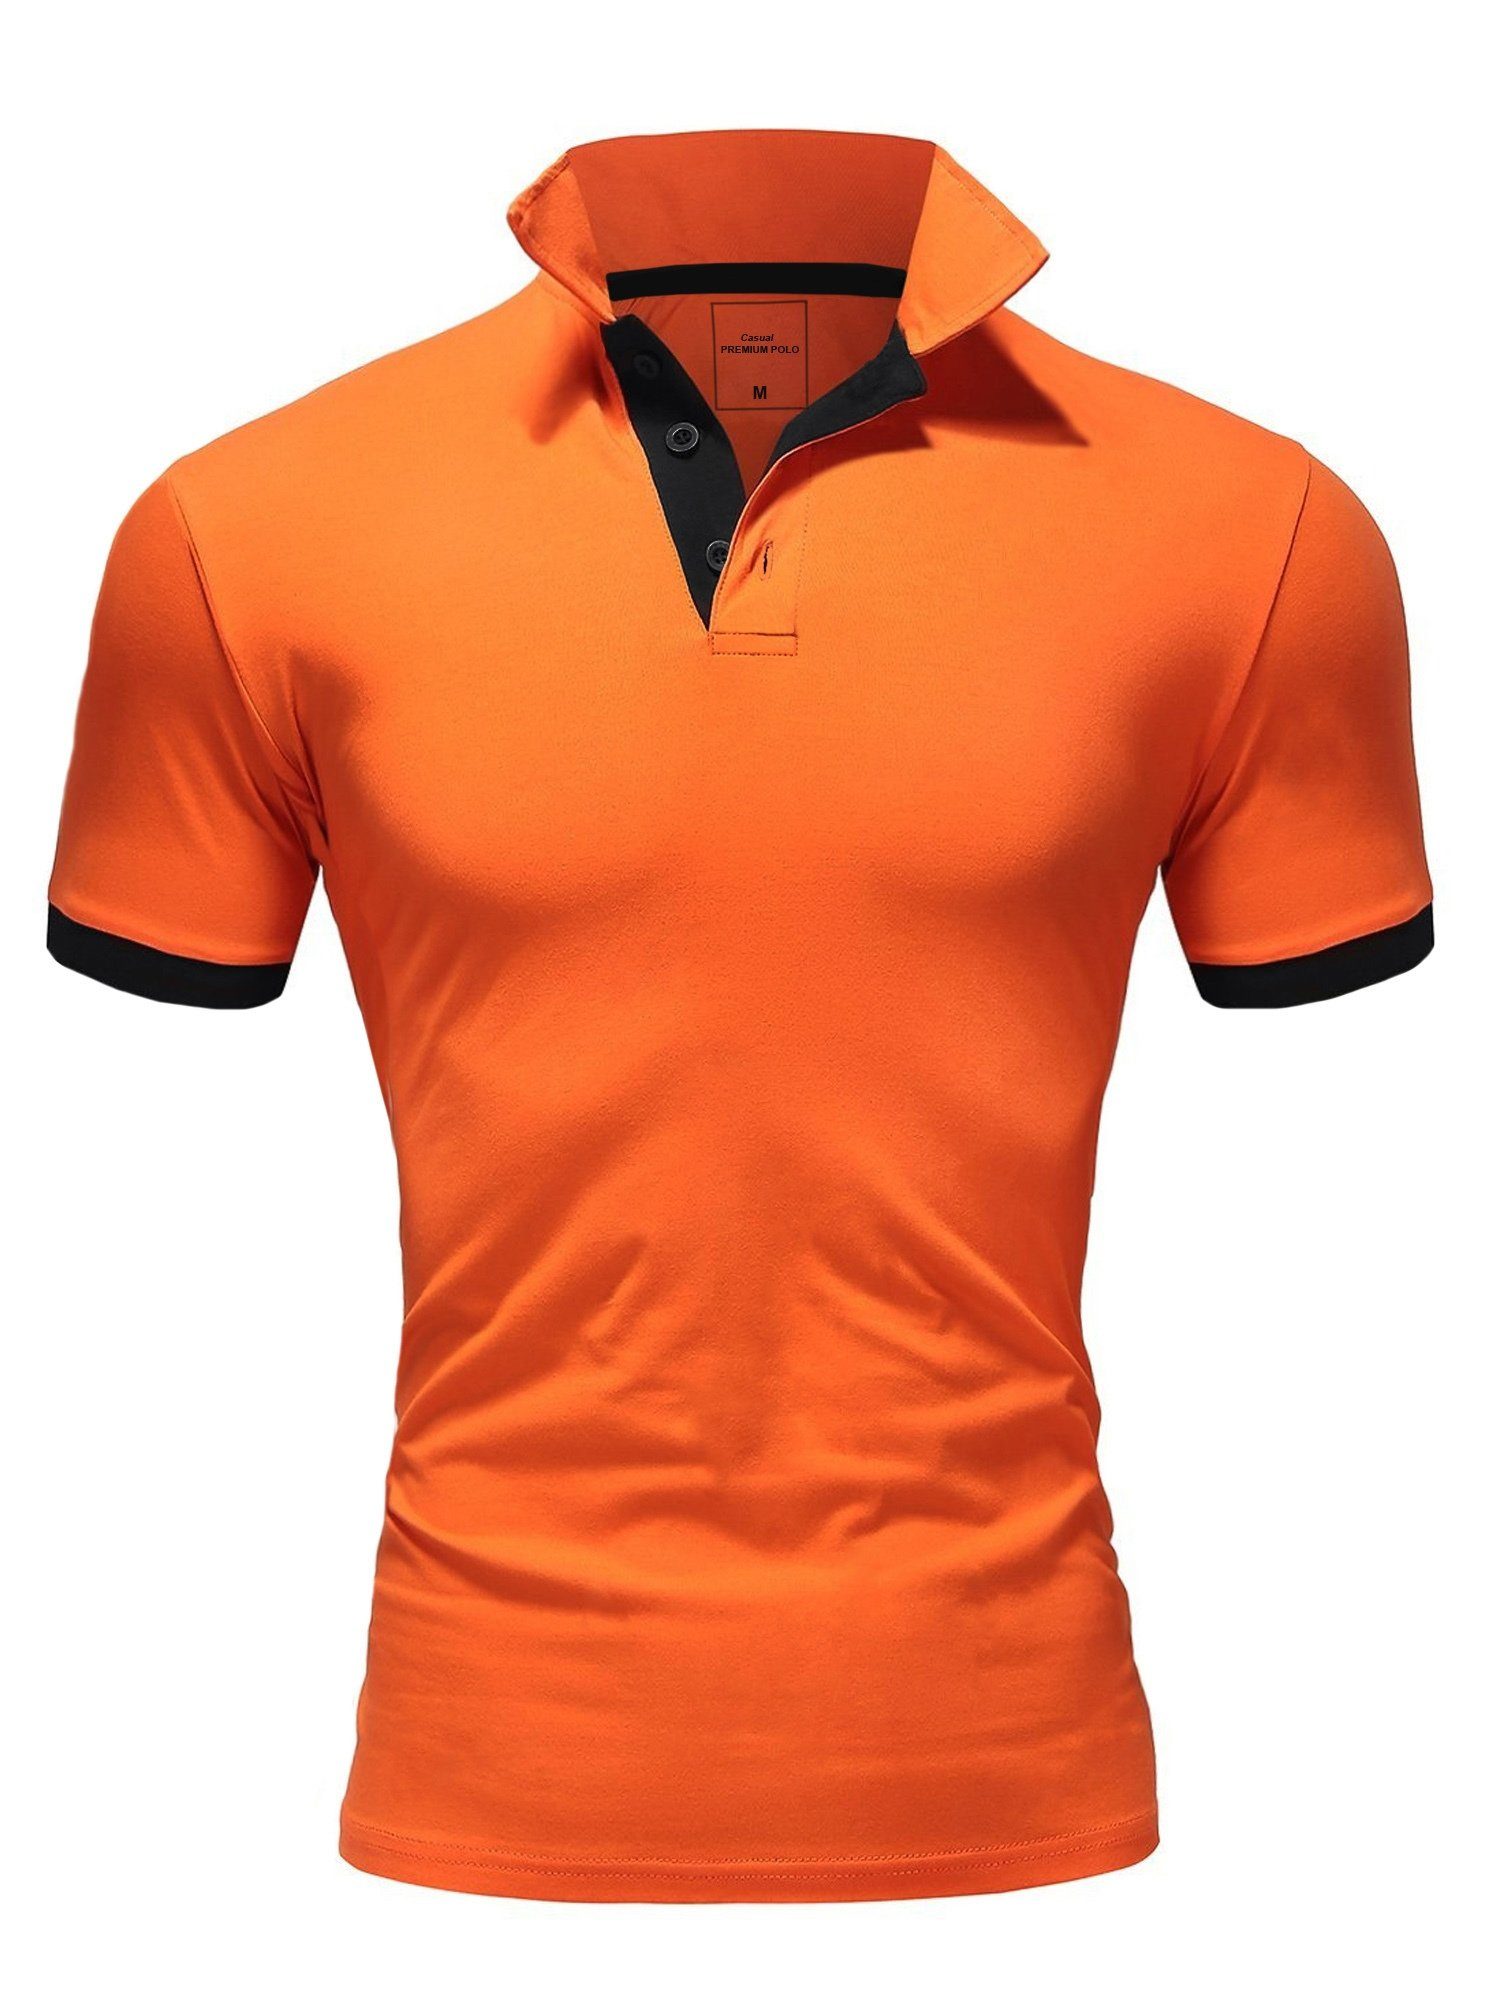 Amaci&Sons Poloshirt Orange/Schwarz Poloshirt Basic Kontrast DETROIT